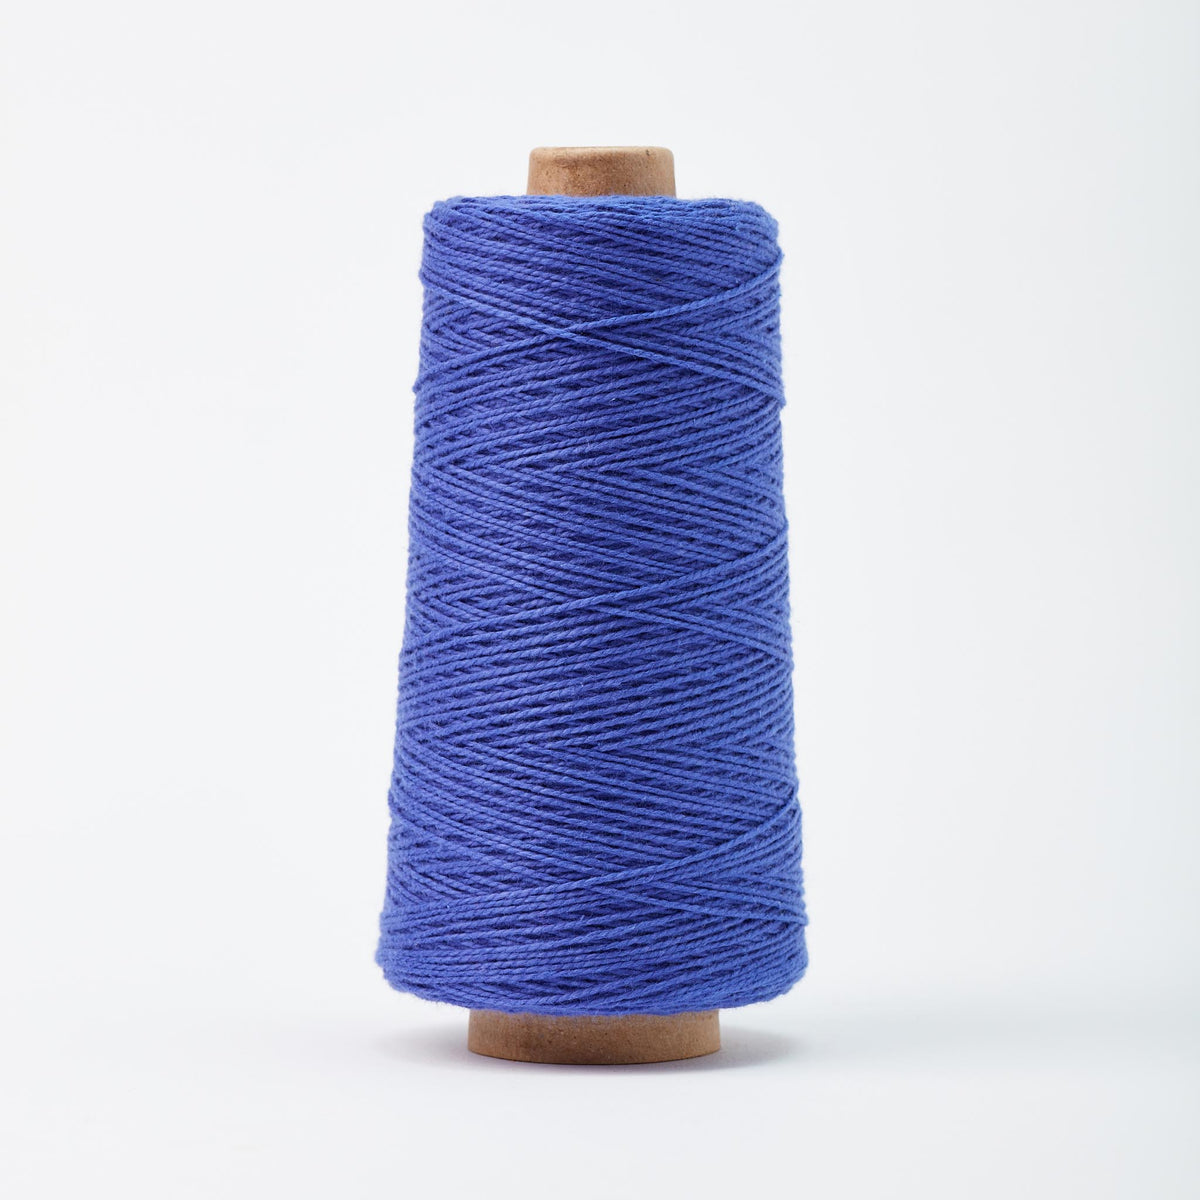 Looms & Weaving Equipment - Gist Yarn